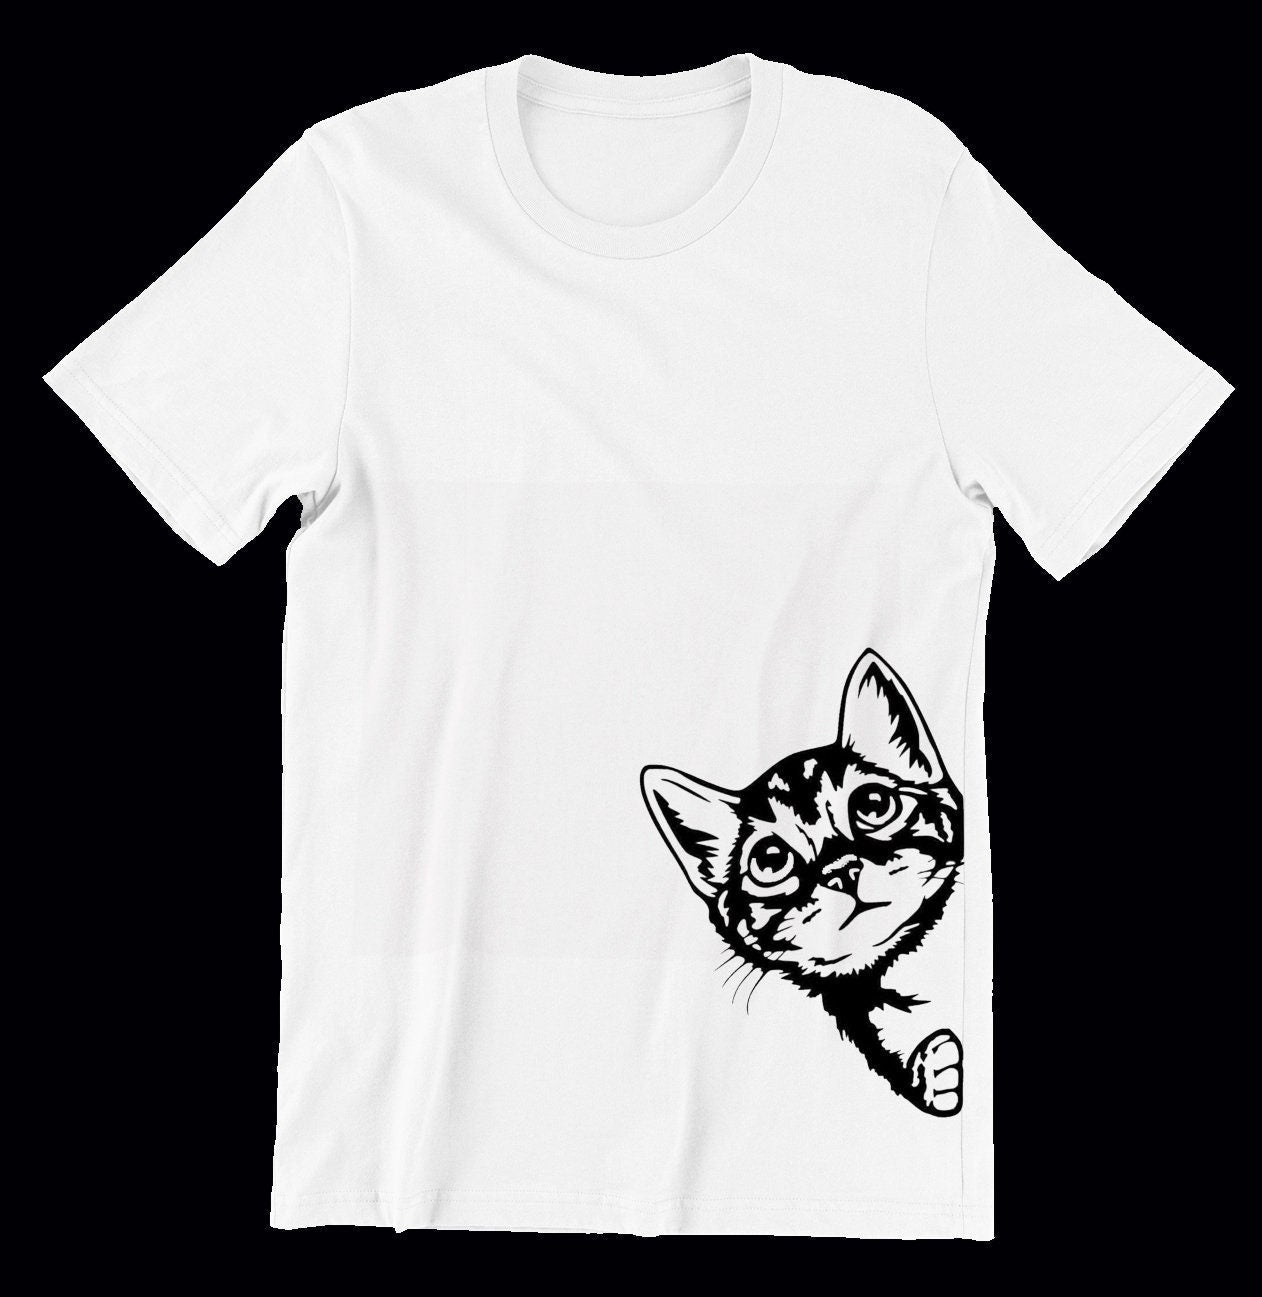 Cute Cat Shirt, Funny T-shirt,Cat Lover Shirt, Cute Cat Peeking Tee, Unisex, toddler, youth, Cat Shirt, Fast Shipping, Best Quality Shirt